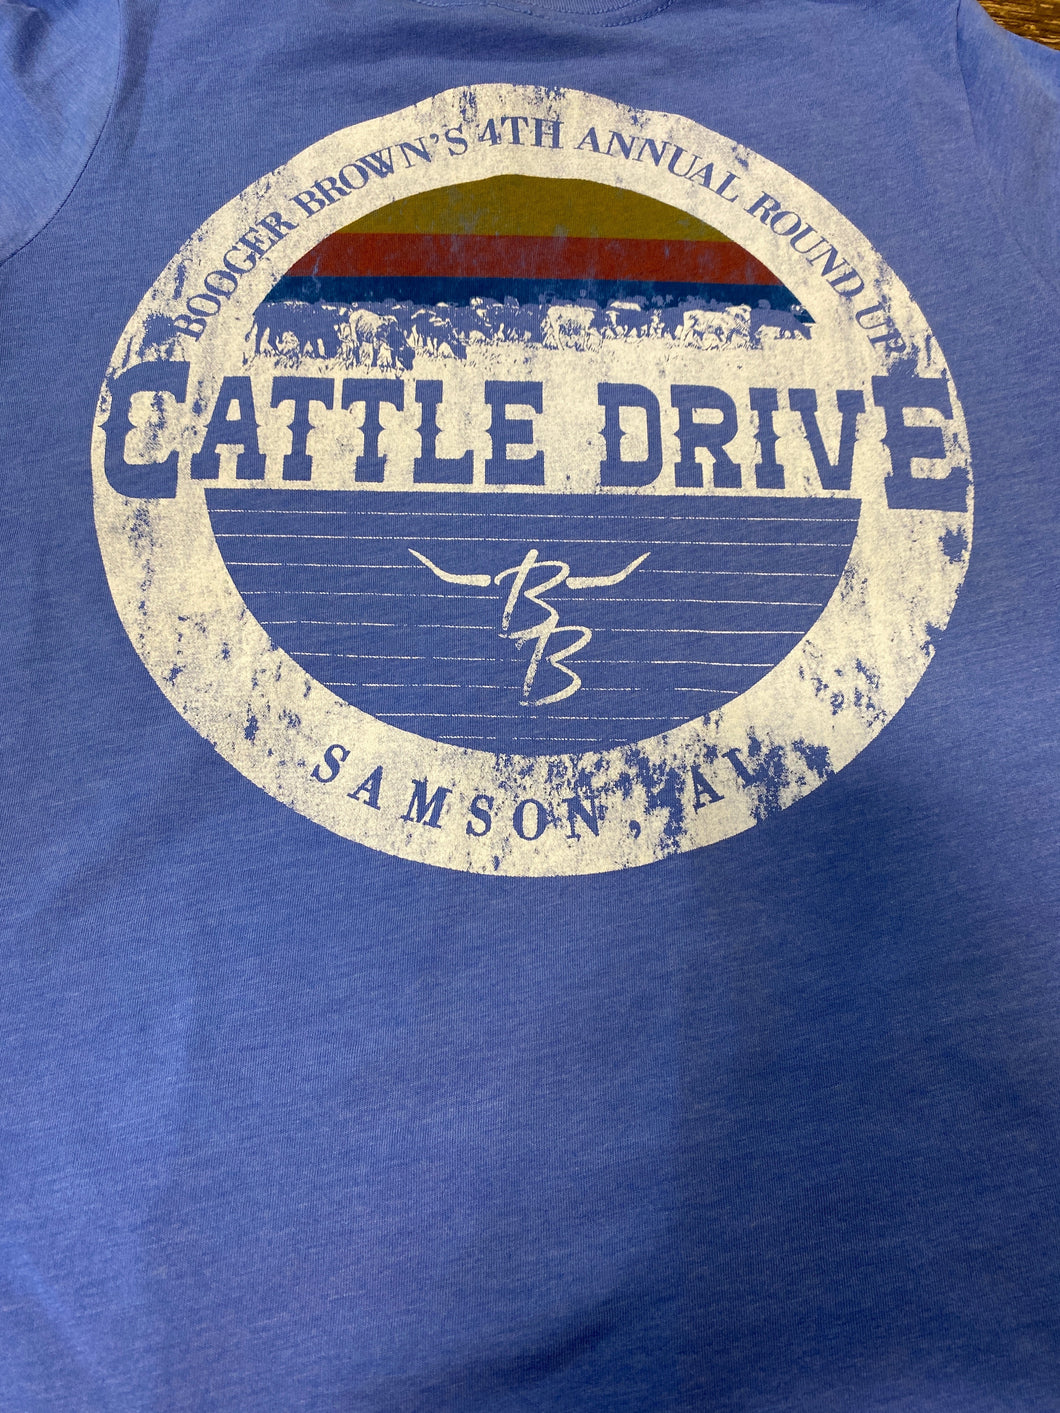 Cattle Drive Kids -34 Shirts